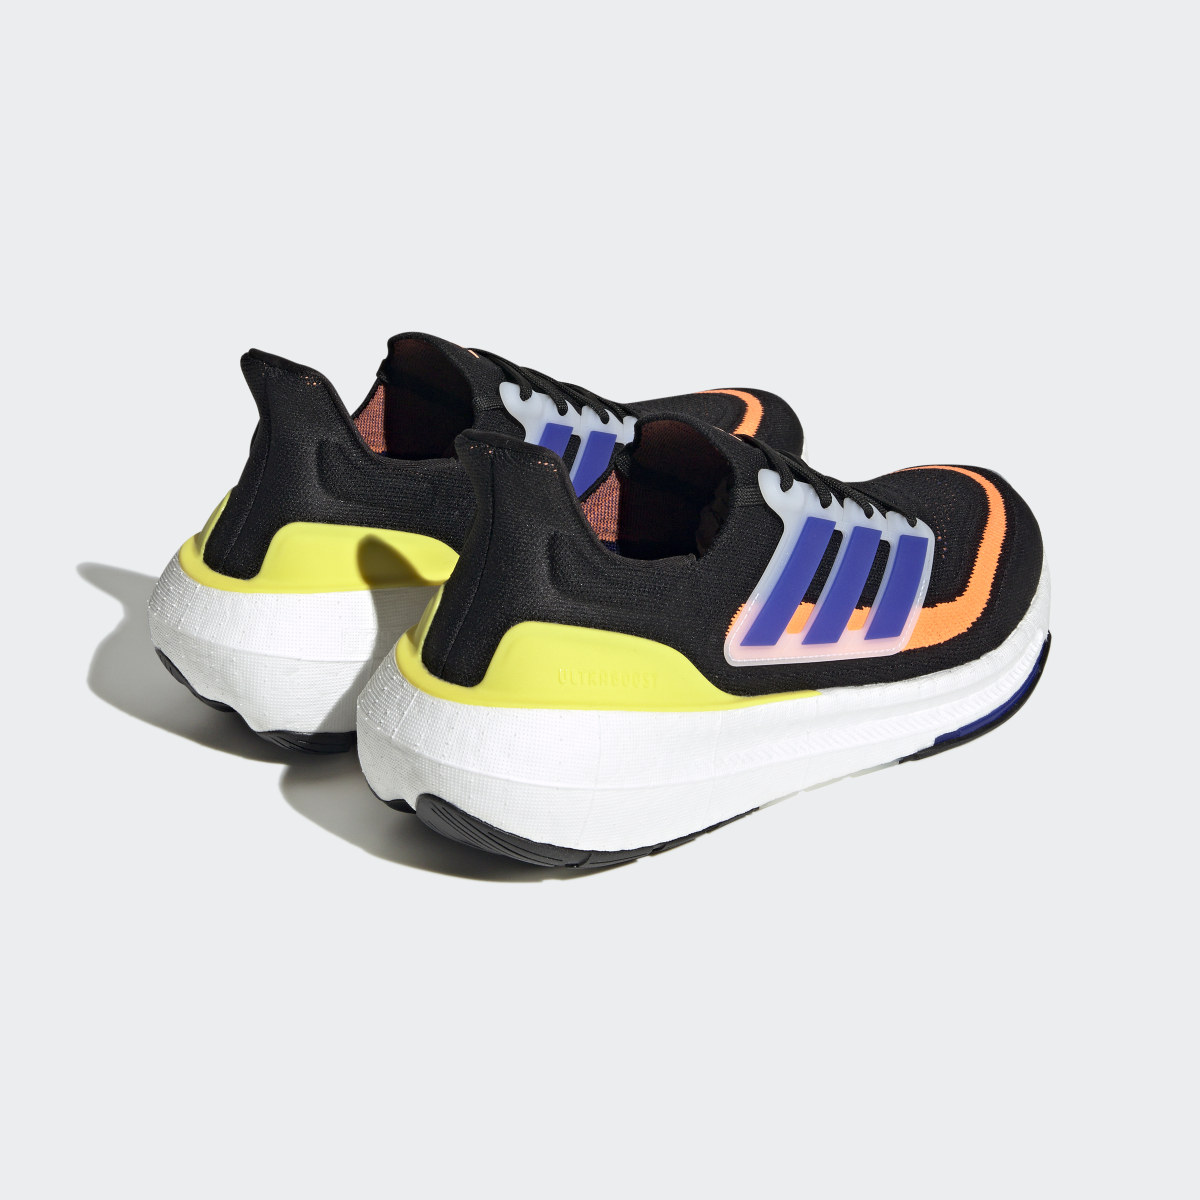 Adidas Ultraboost Light Shoes. 6